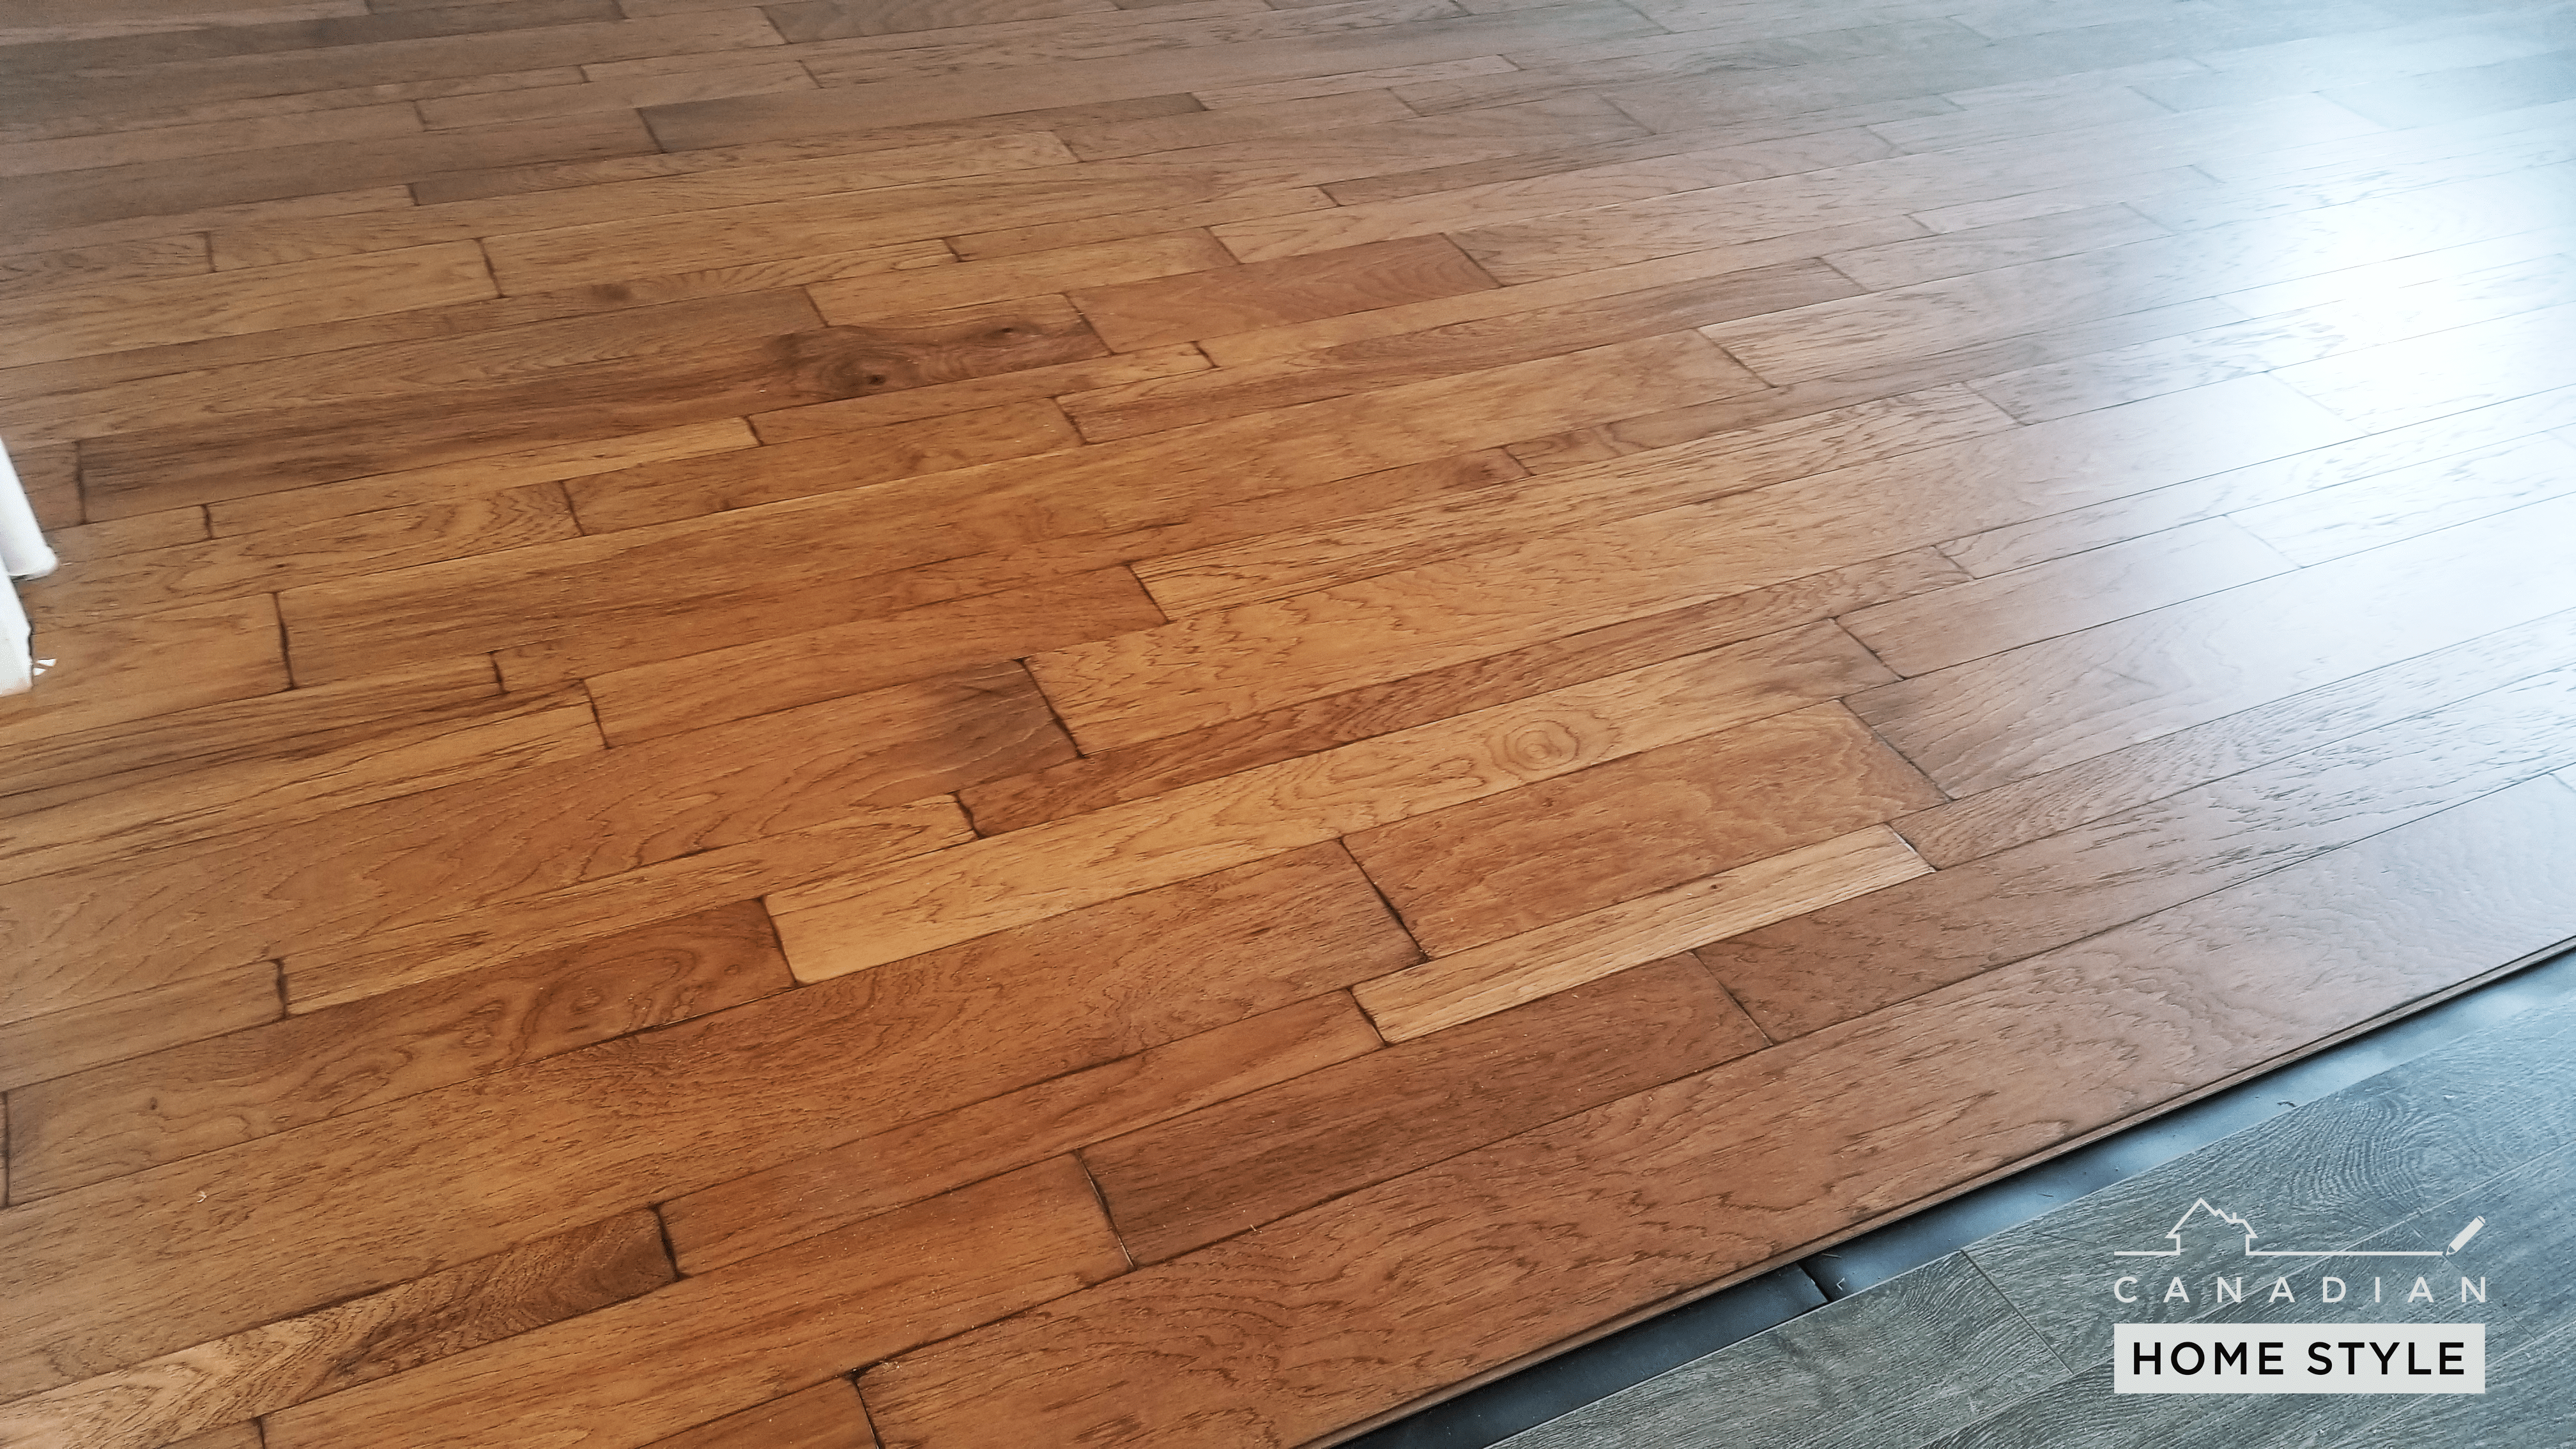 Seamless Vancouver hardwood floor installations